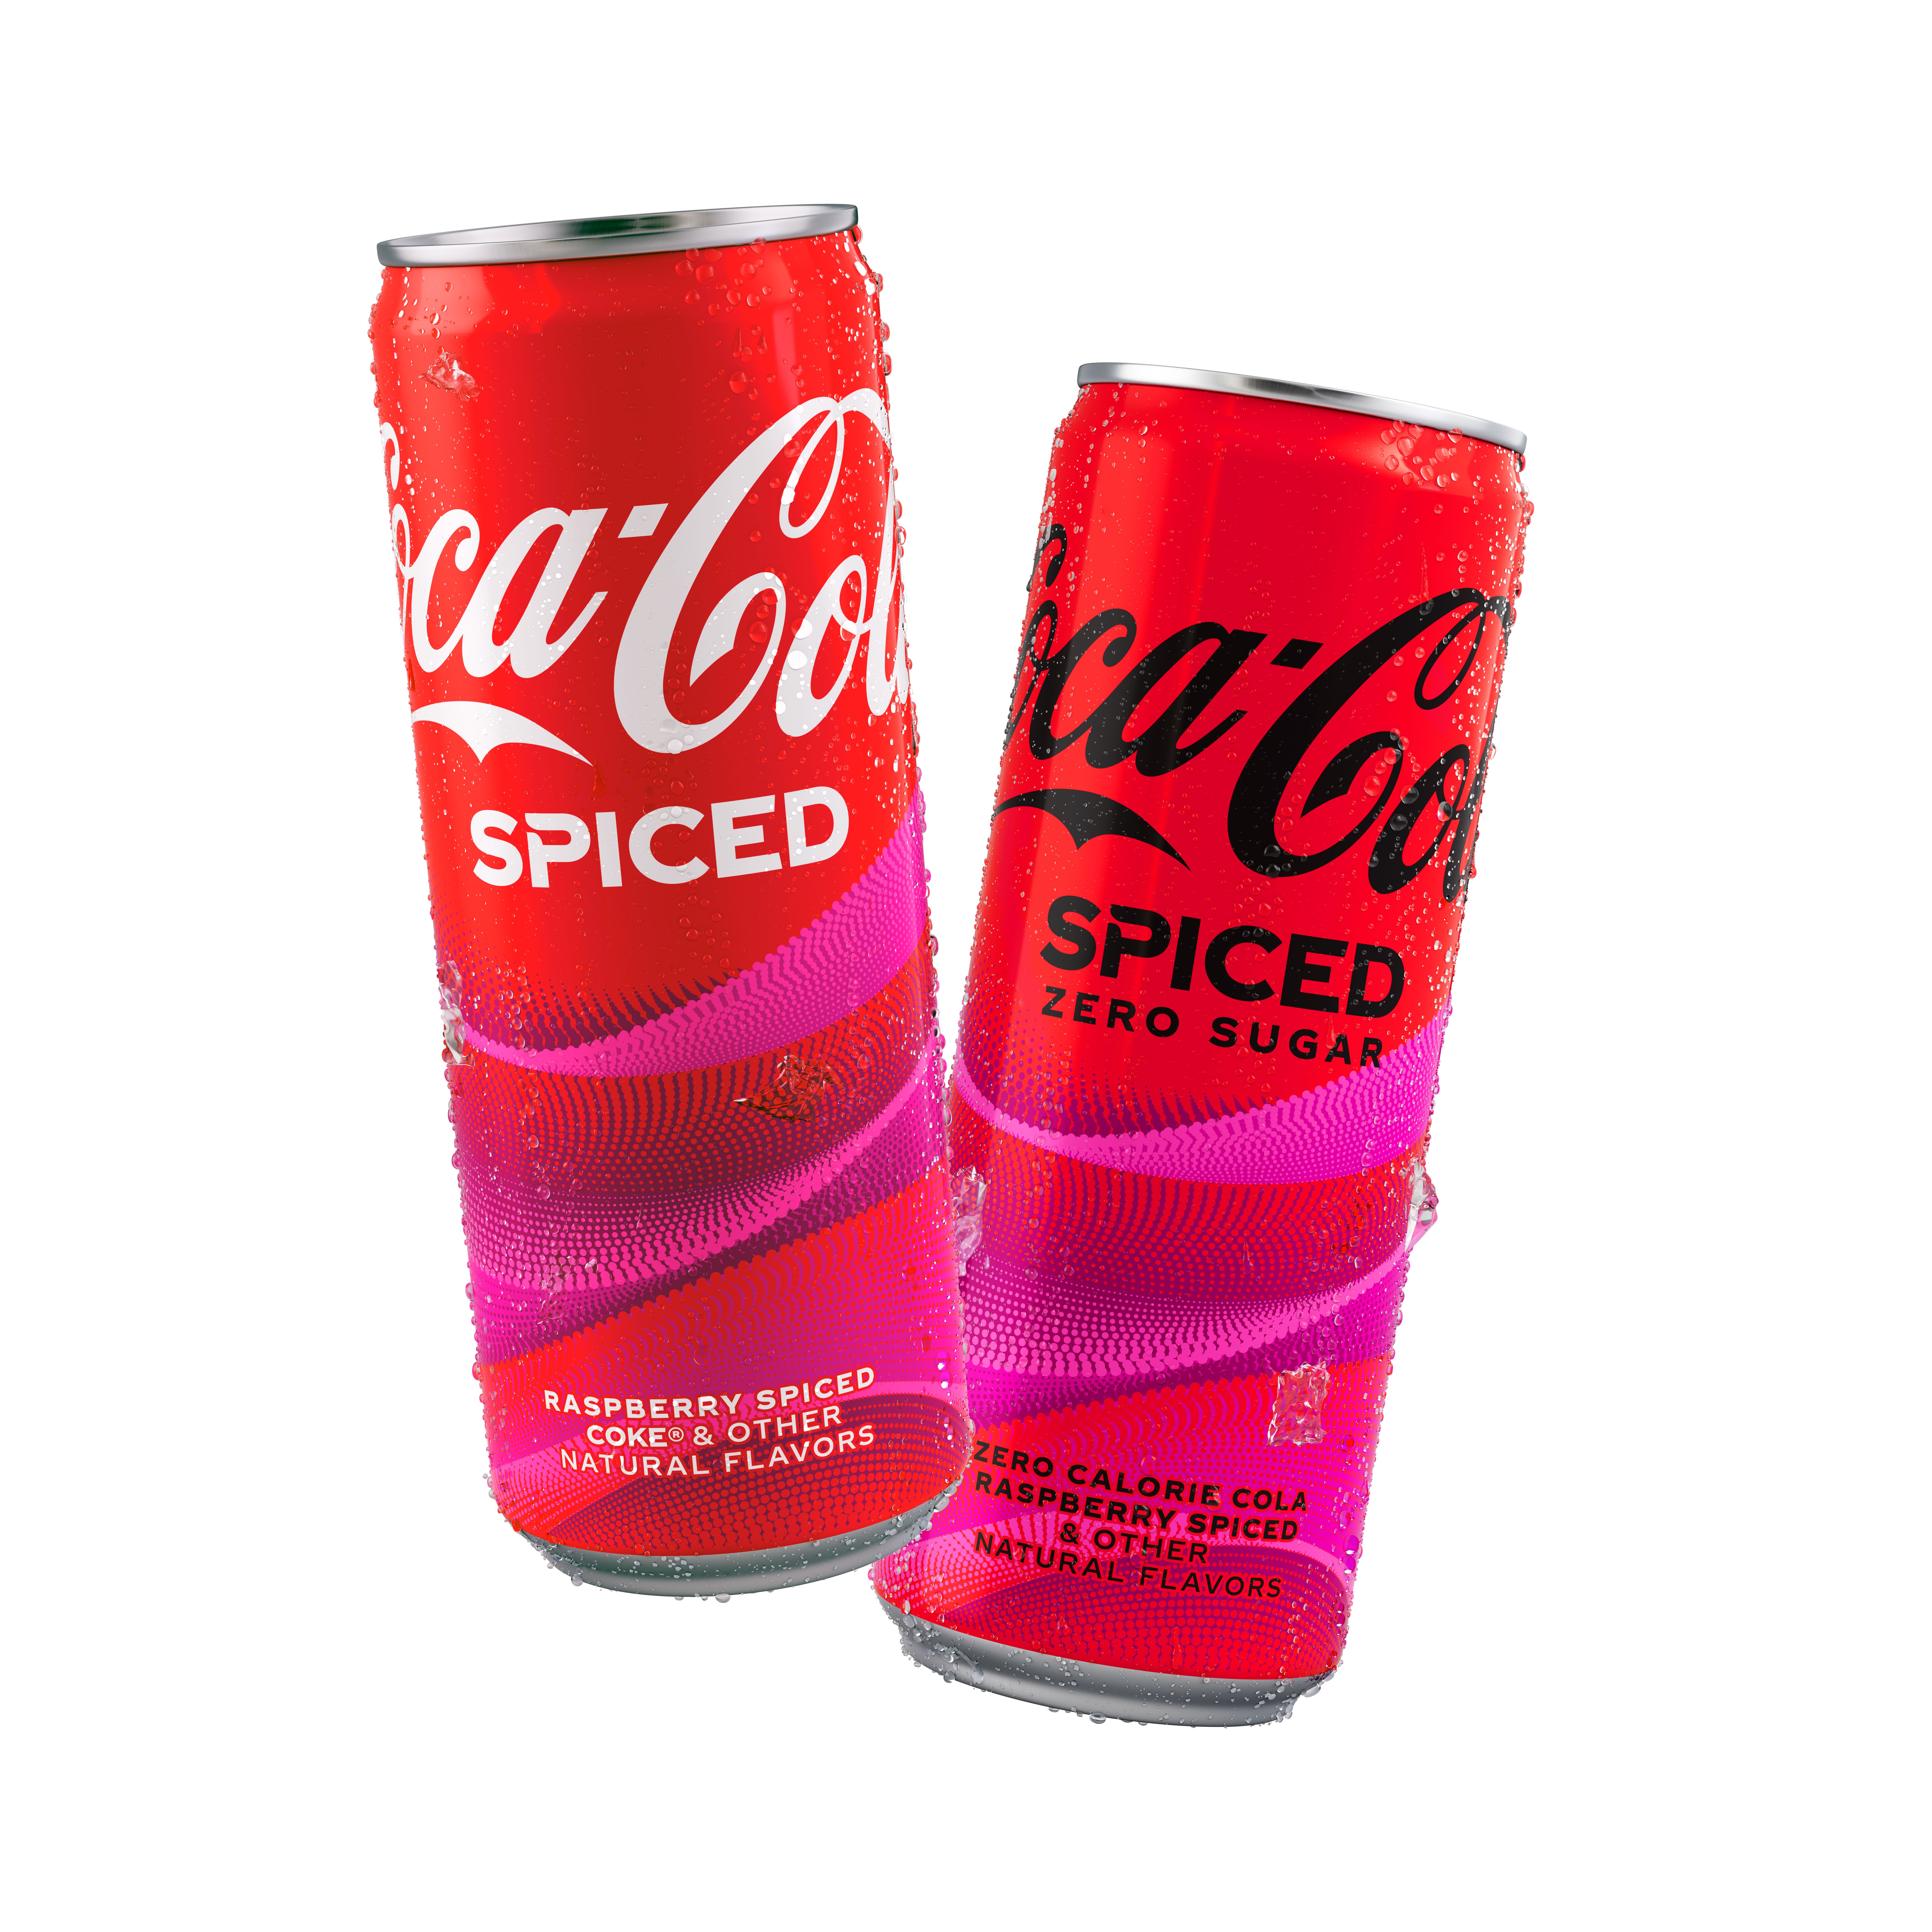 https://media.cnn.com/api/v1/images/stellar/prod/hero-coke-spiced-coke-spiced-zero-sugar-copy.jpg?c=original